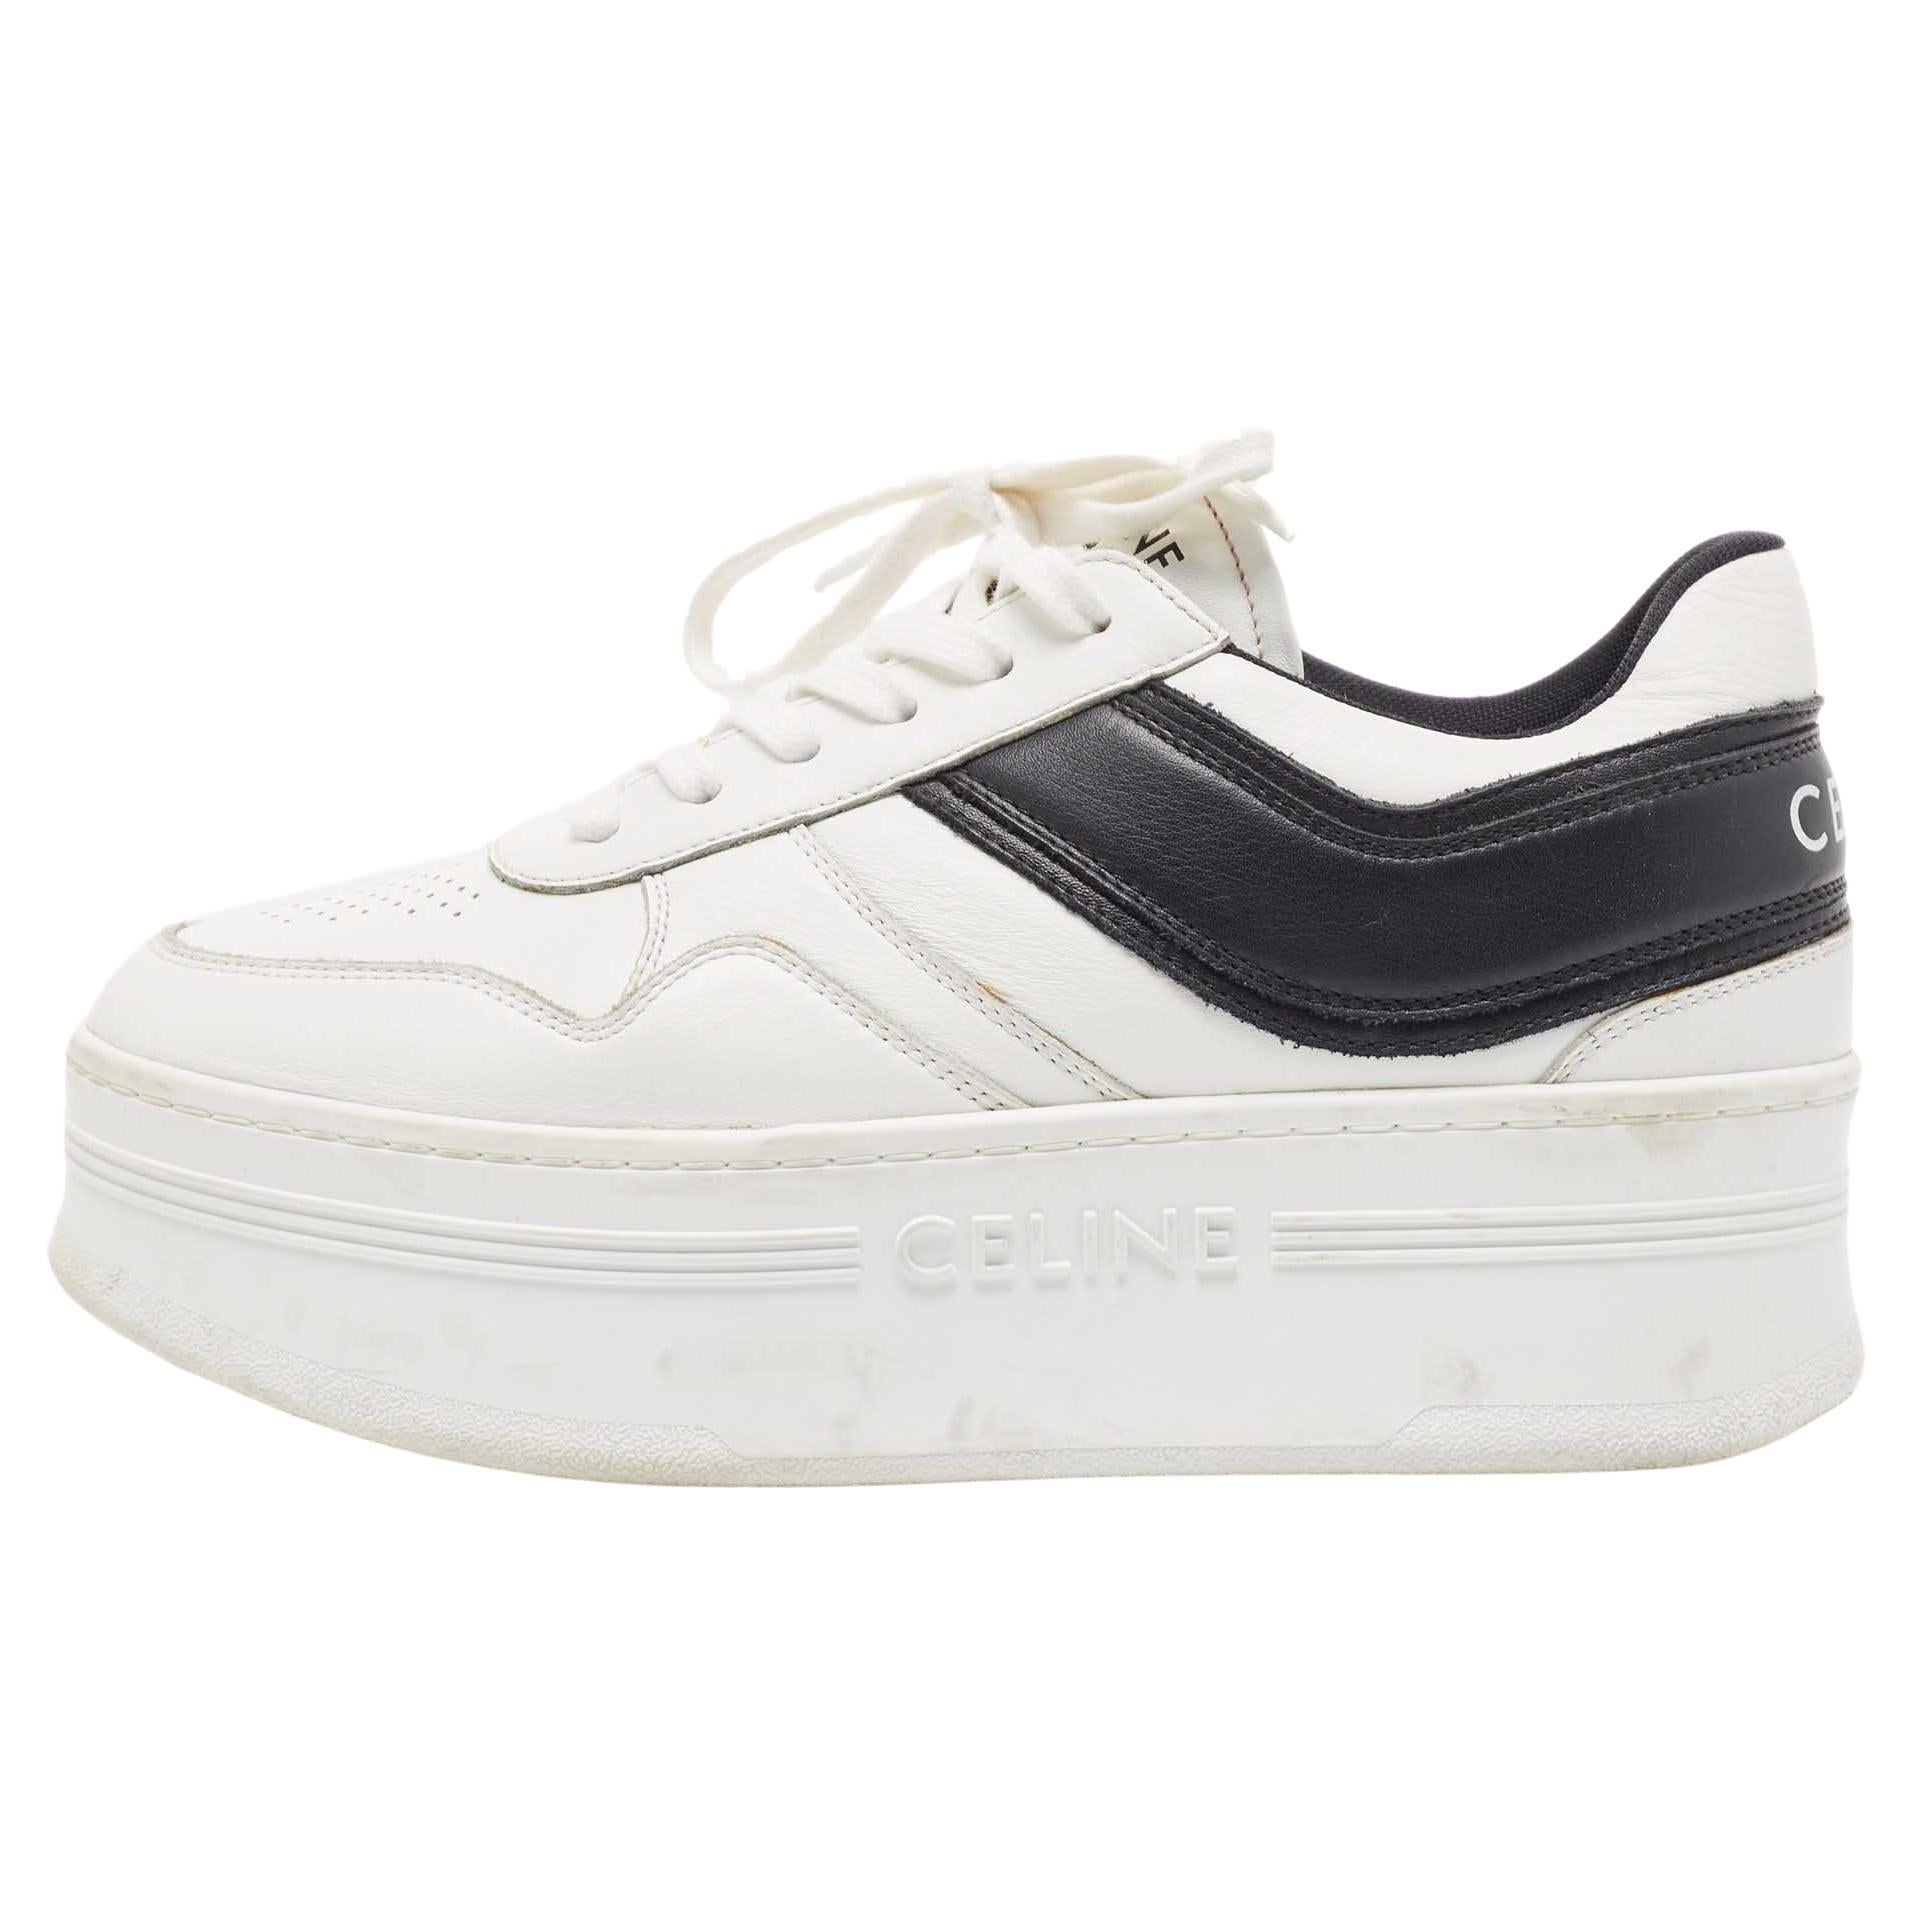 Celine White/Black Leather Block Platform Sneakers Size 39